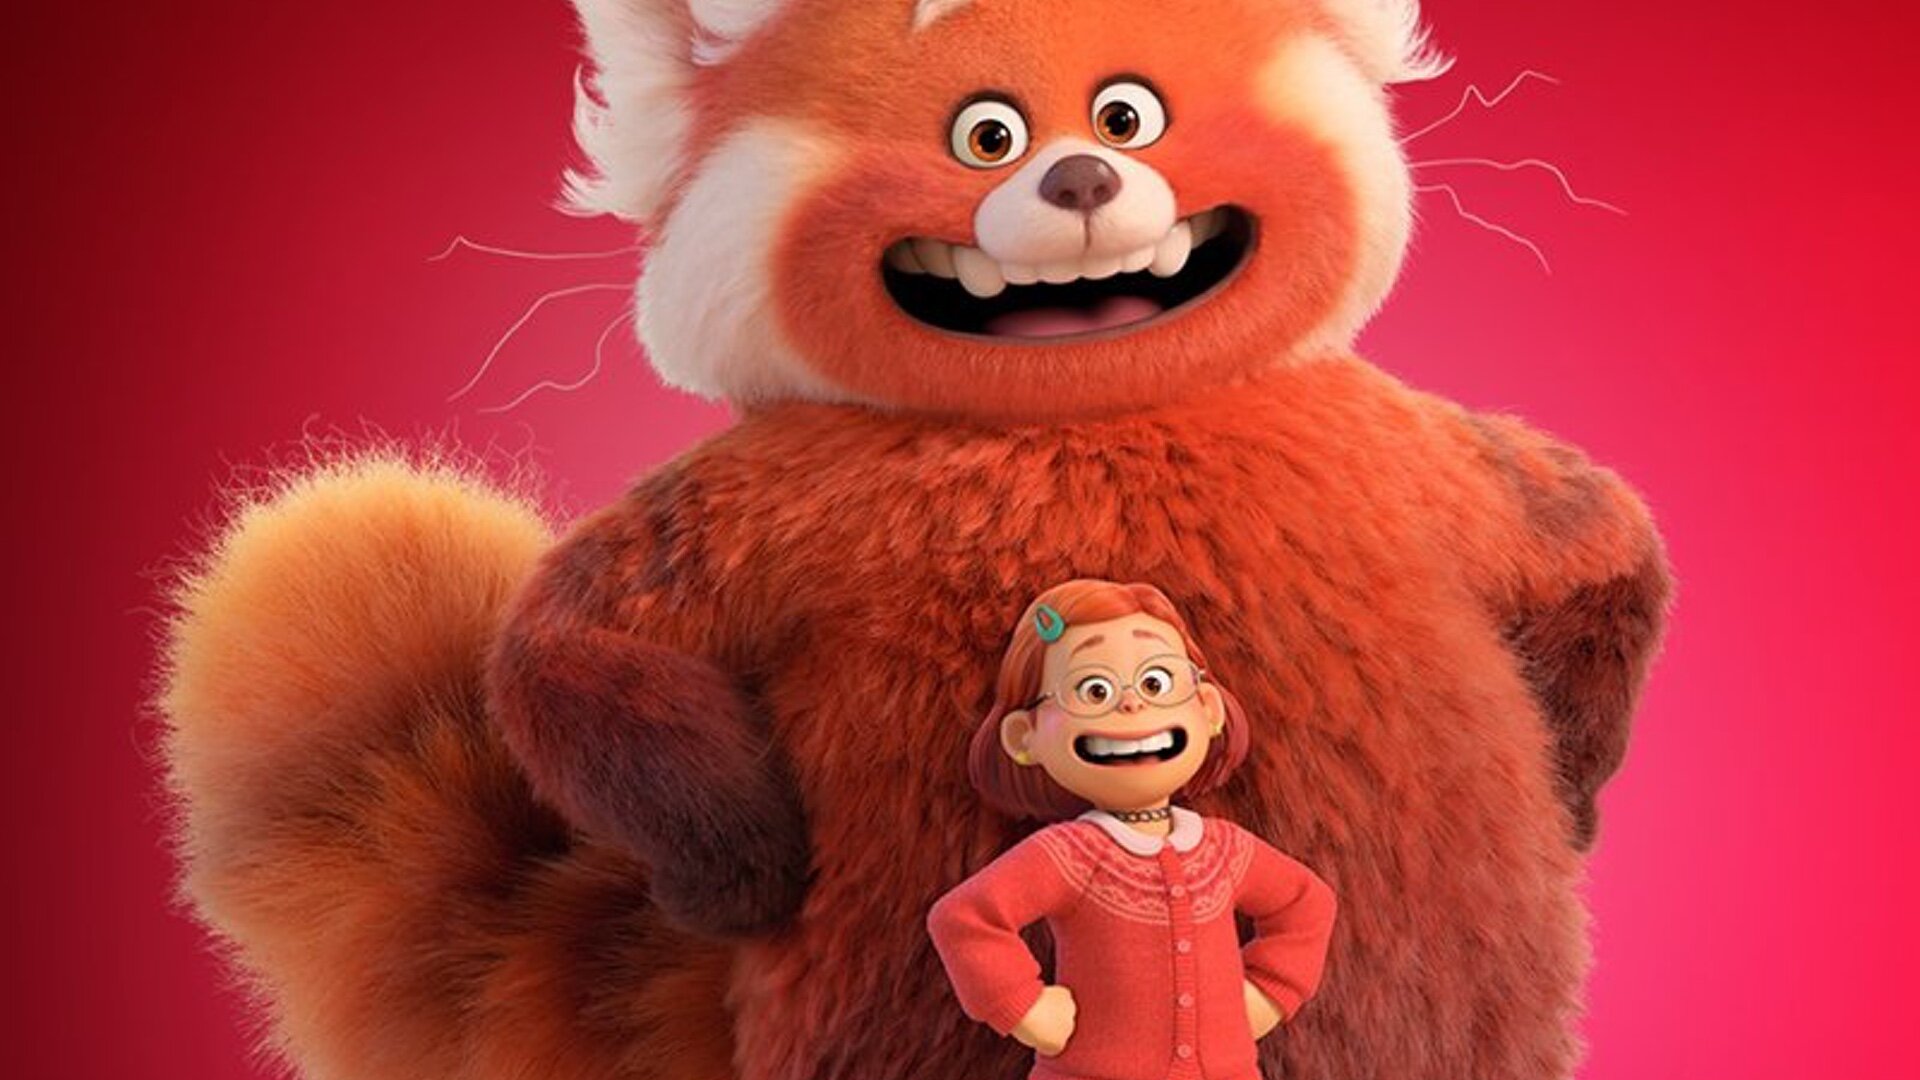 Pixar Announces New Animated Film TURNING RED